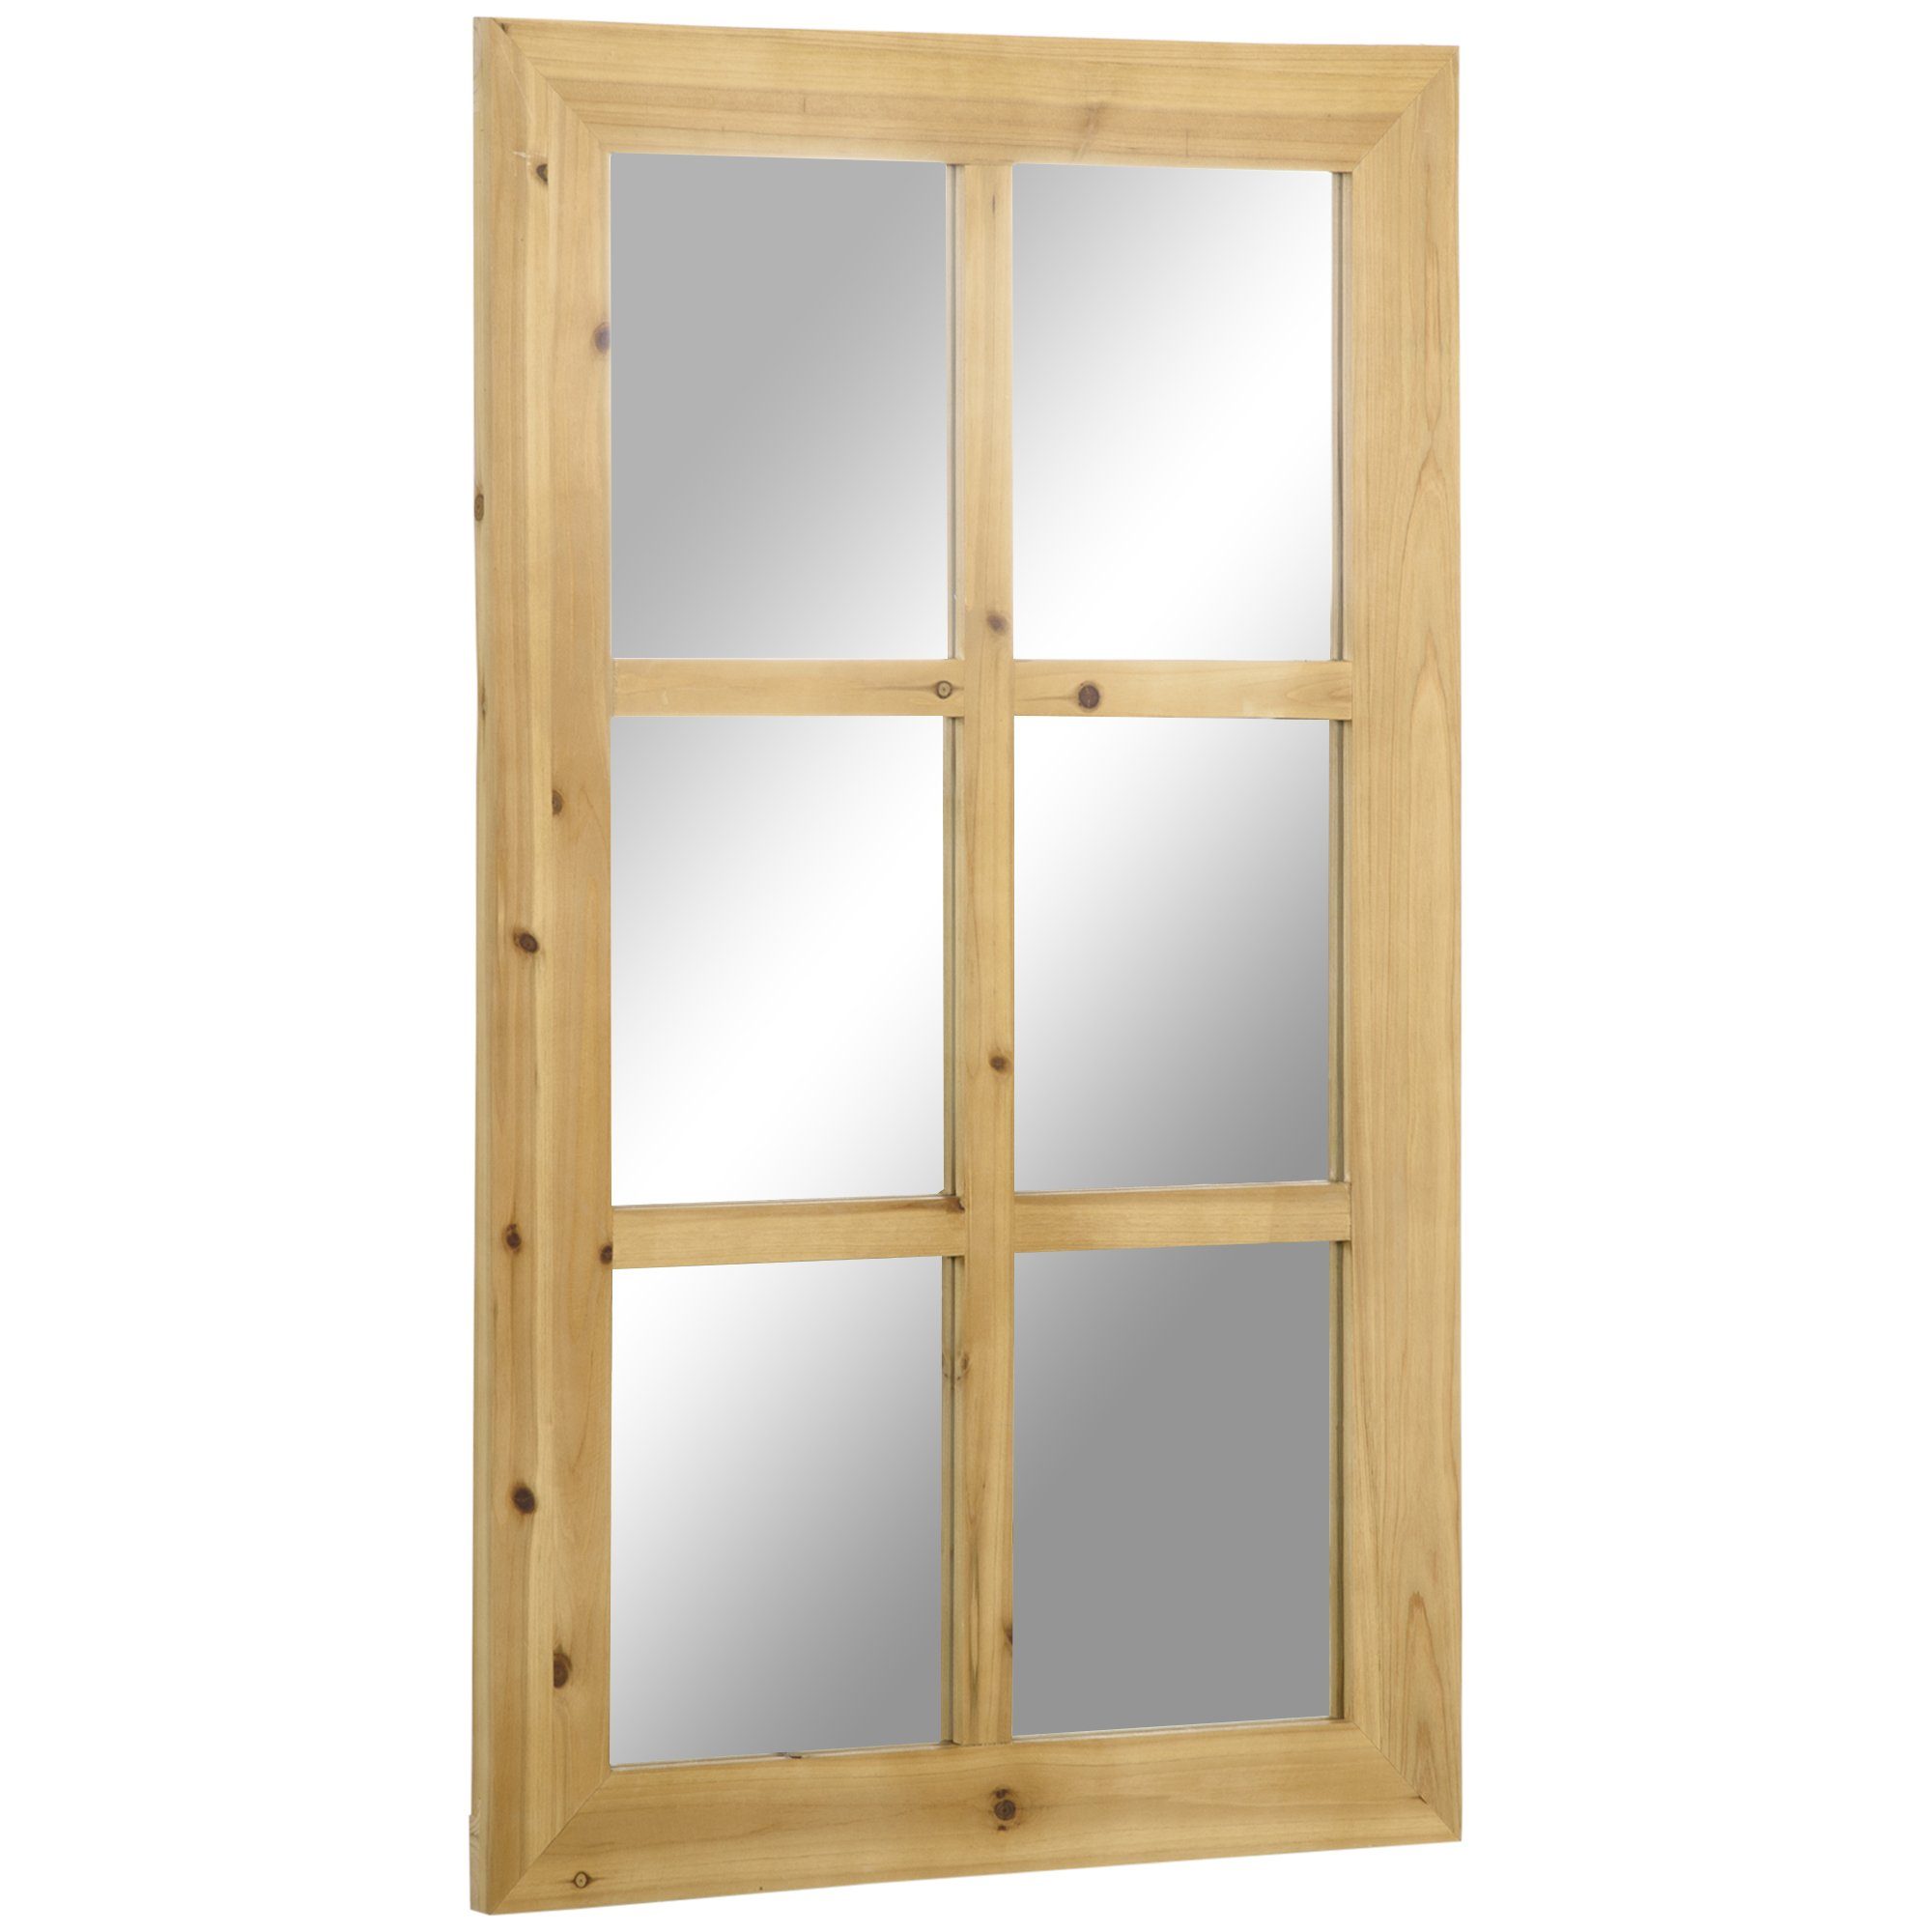 HOMCOM Wandspiegel Spiegel in Fensteroptik 101,6 cm x 60,9 cm x 2 cm MDF-Holz Tannenholz (Set, 1-St., 1 x Wandspiegel), Mit Holzrahmen | Wandspiegel